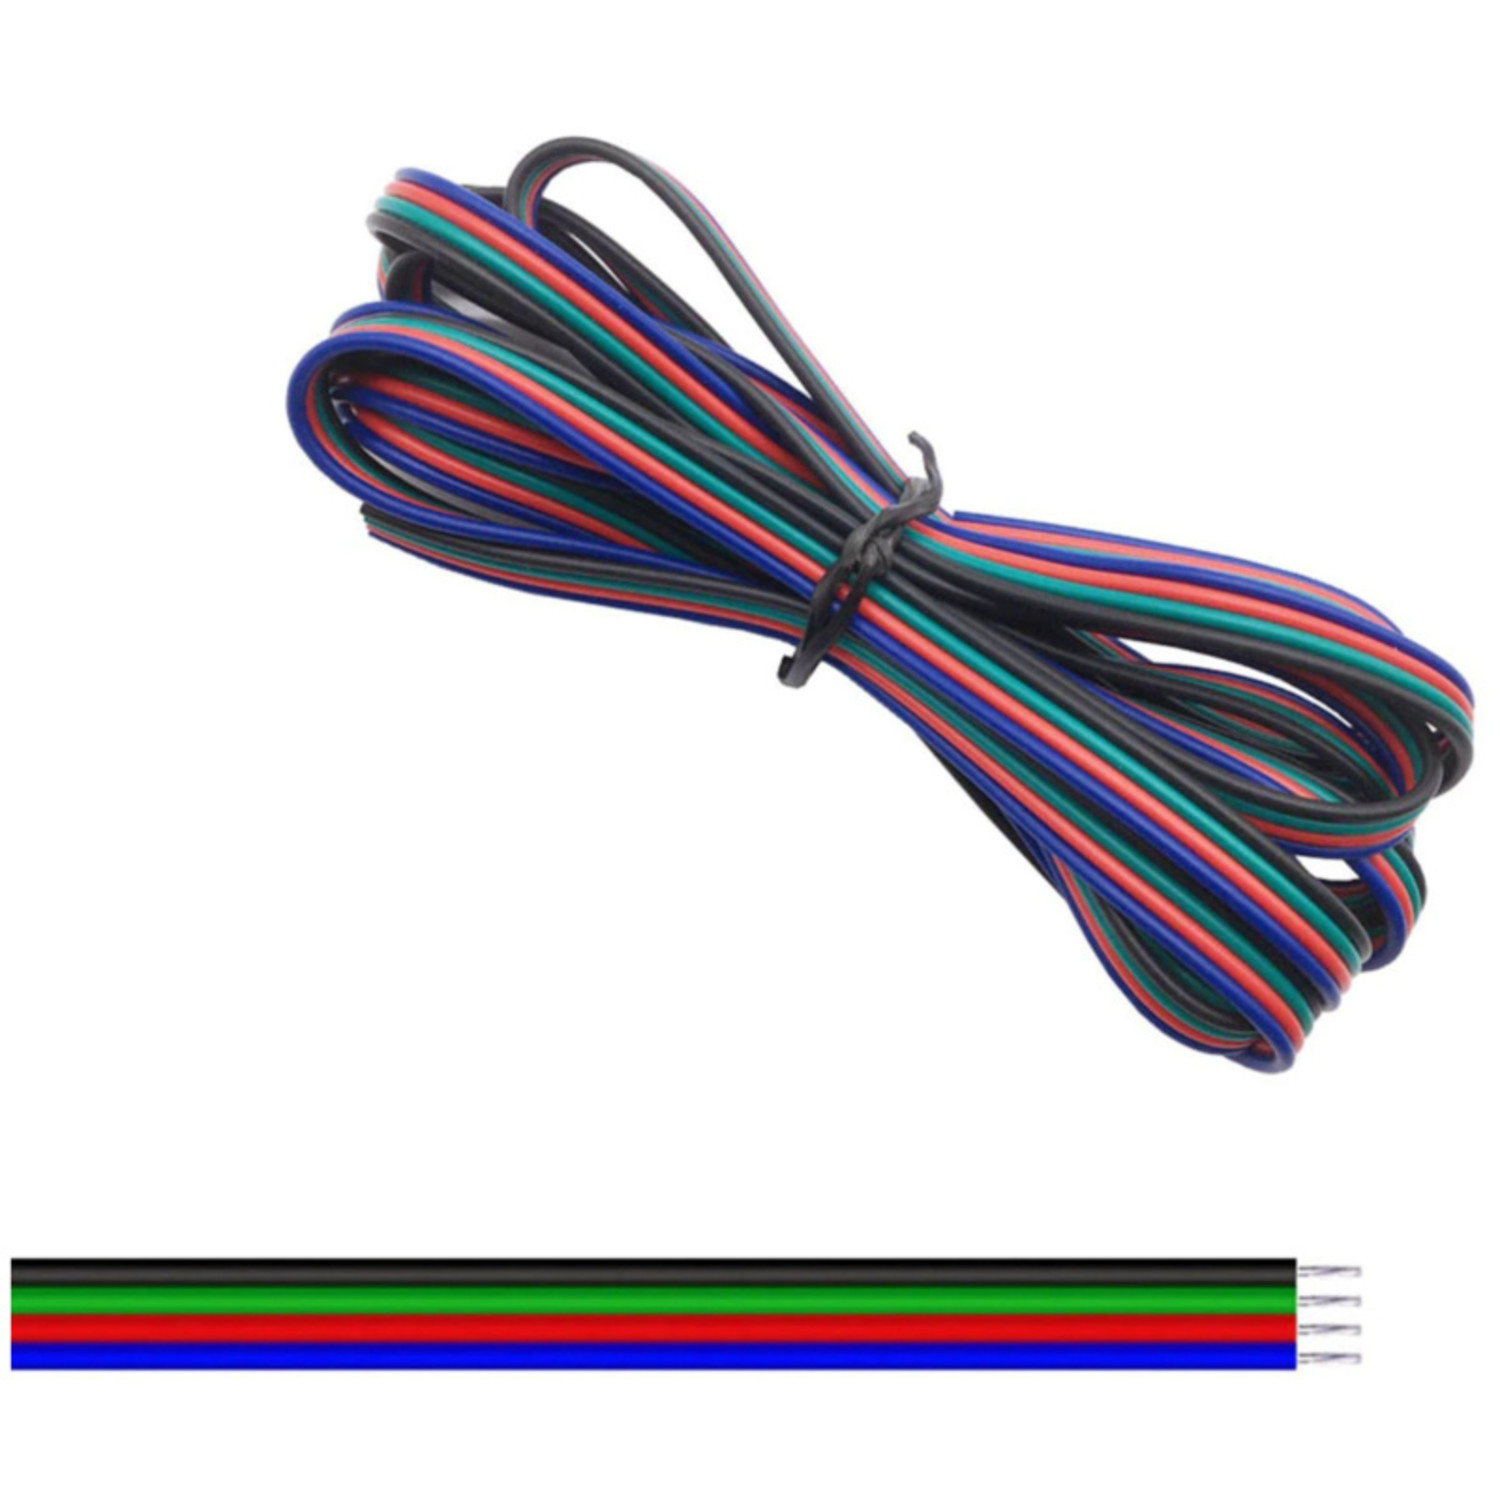 Câbles 4 fils (rouge, vert, bleu et blanc) pour ruban LED RGB